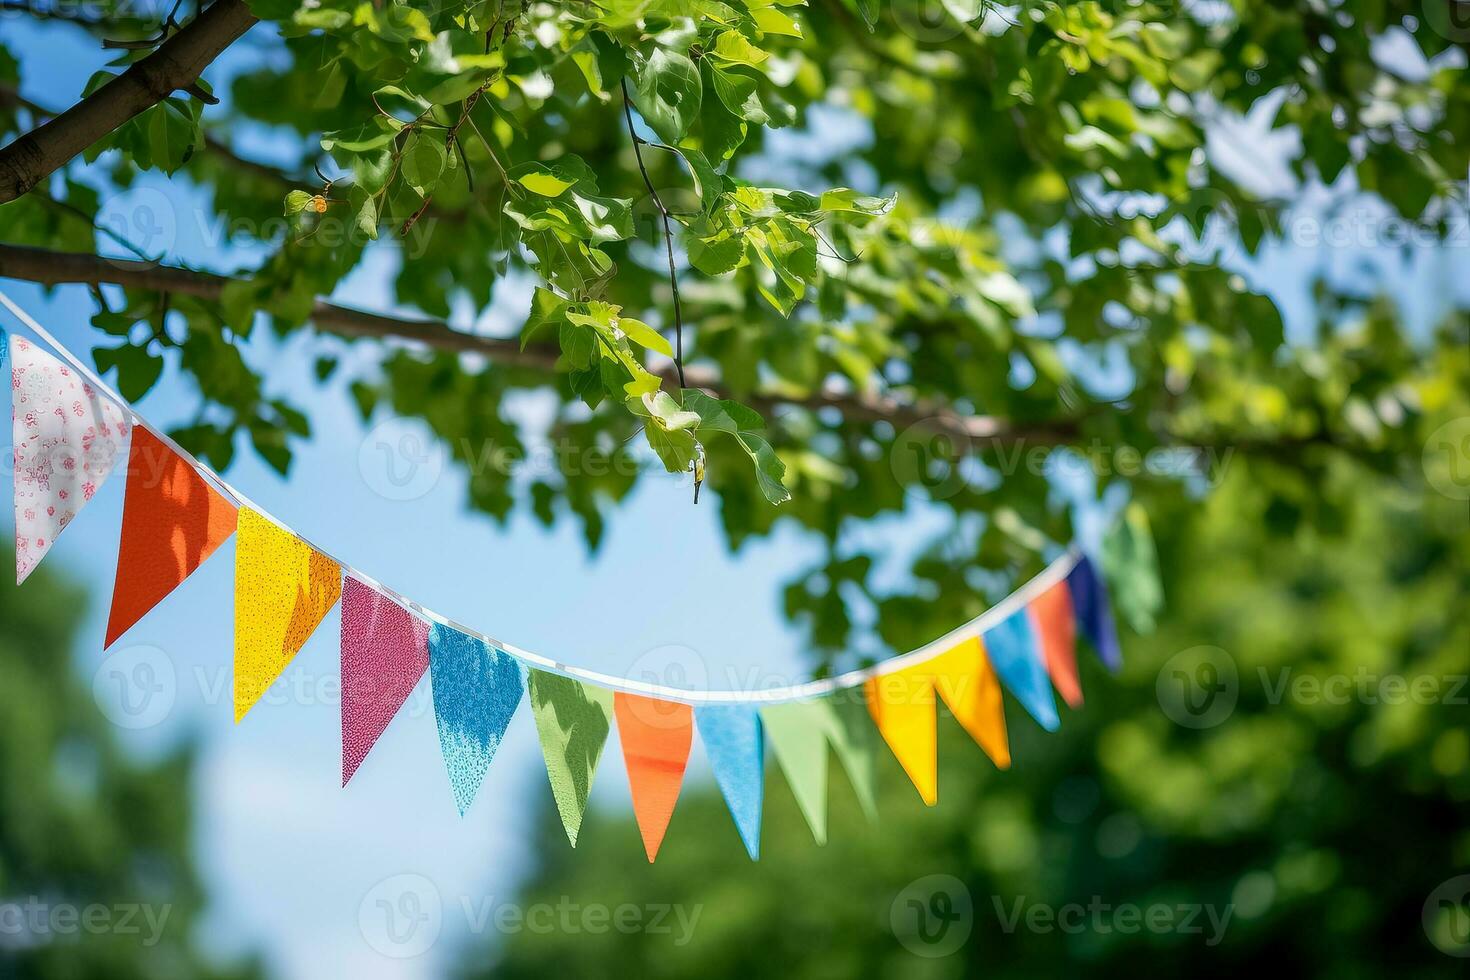 vistoso banderín cuerda decoración en verde árbol follaje en contra azul cielo verano fiesta antecedentes con espacio para texto foto